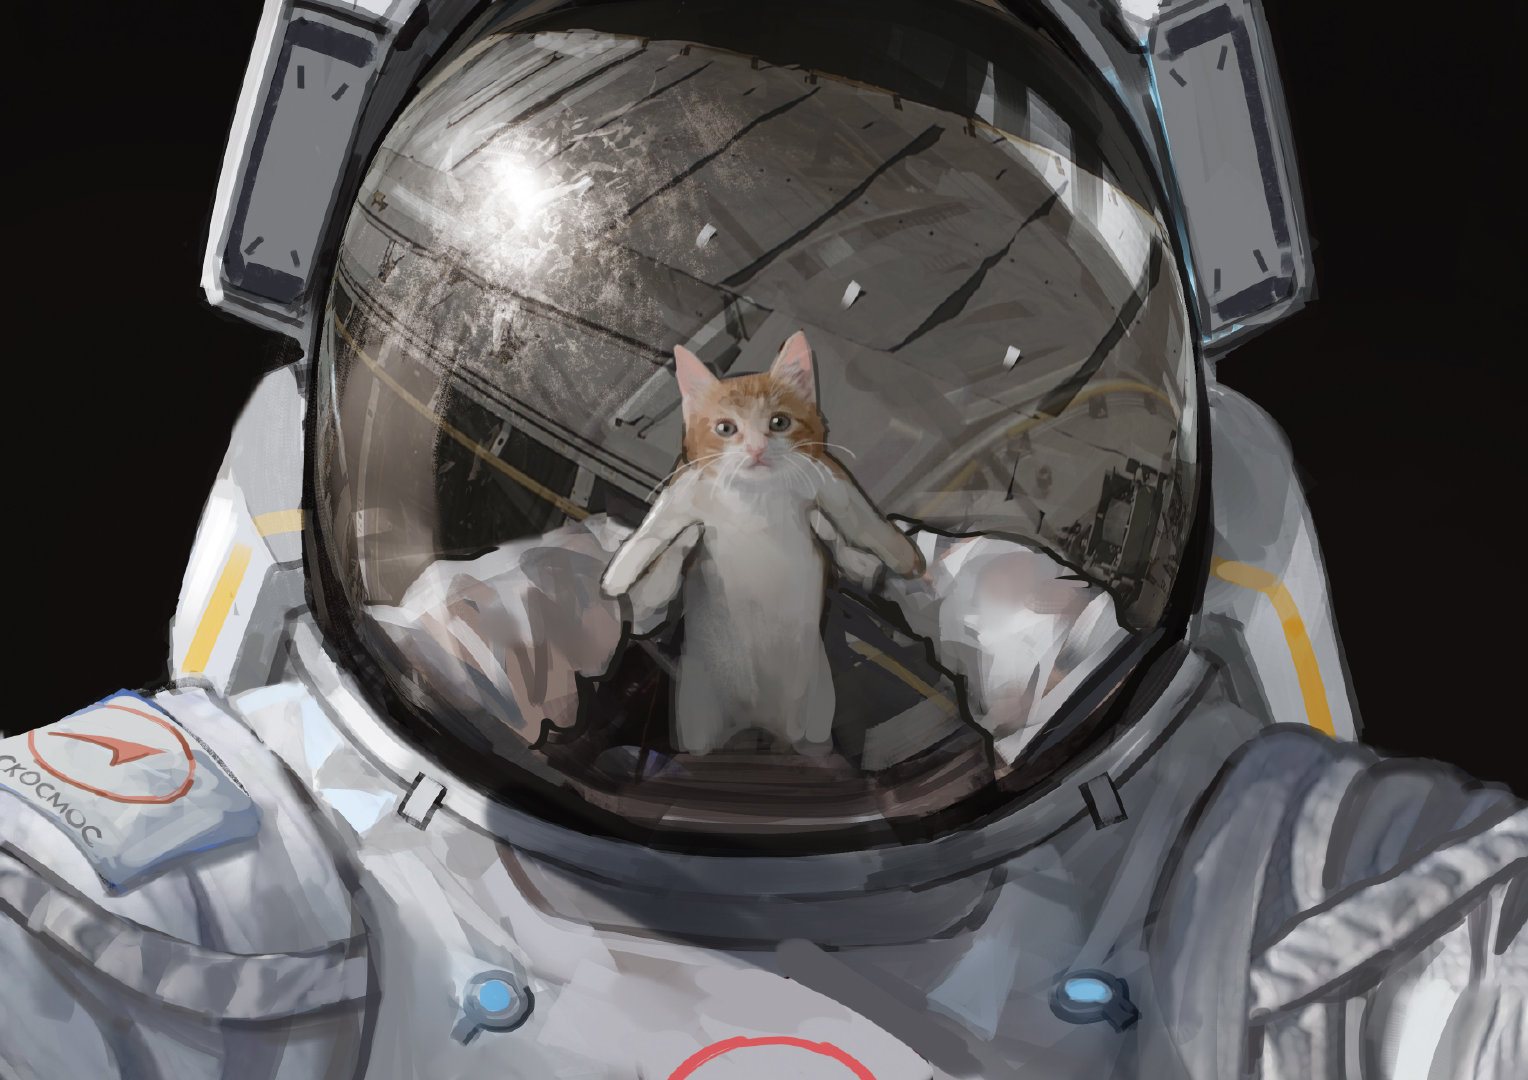 General 1528x1080 astronaut artwork cats space helmet reflection